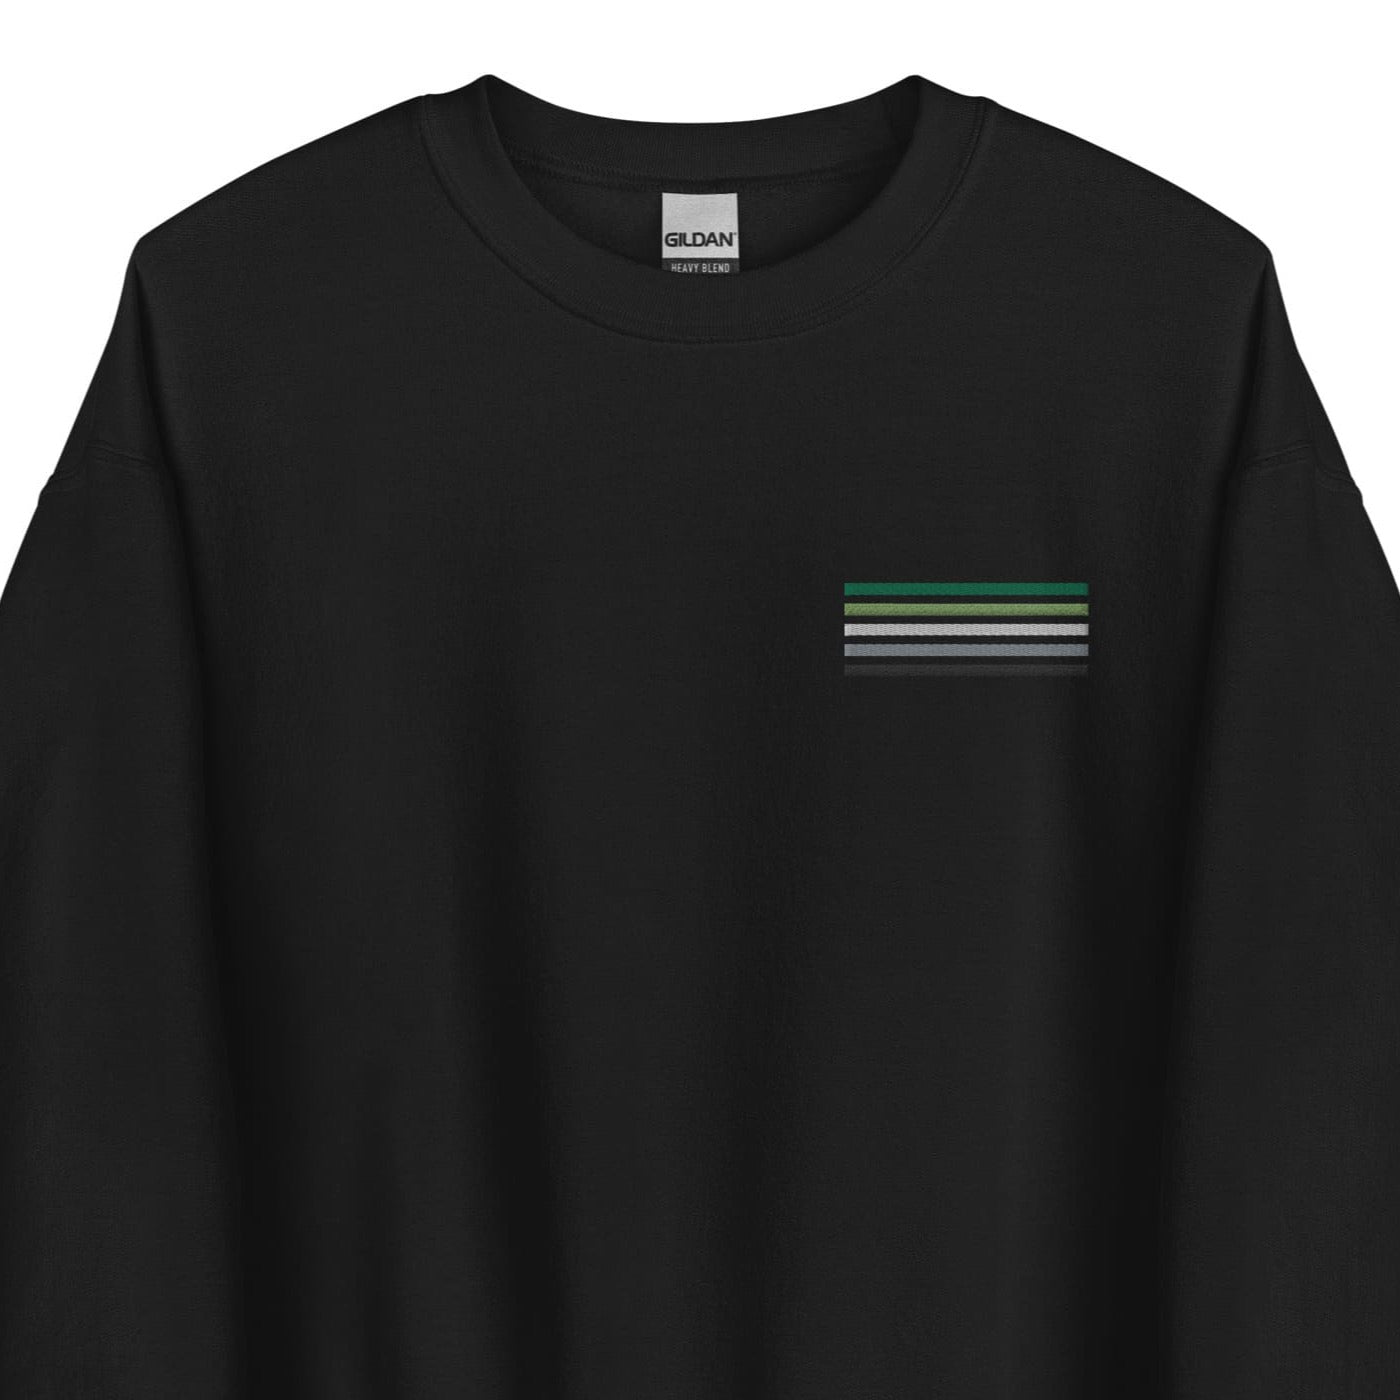 aromantic sweatshirt, subtle aro pride flag embroidered pocket design sweater, main